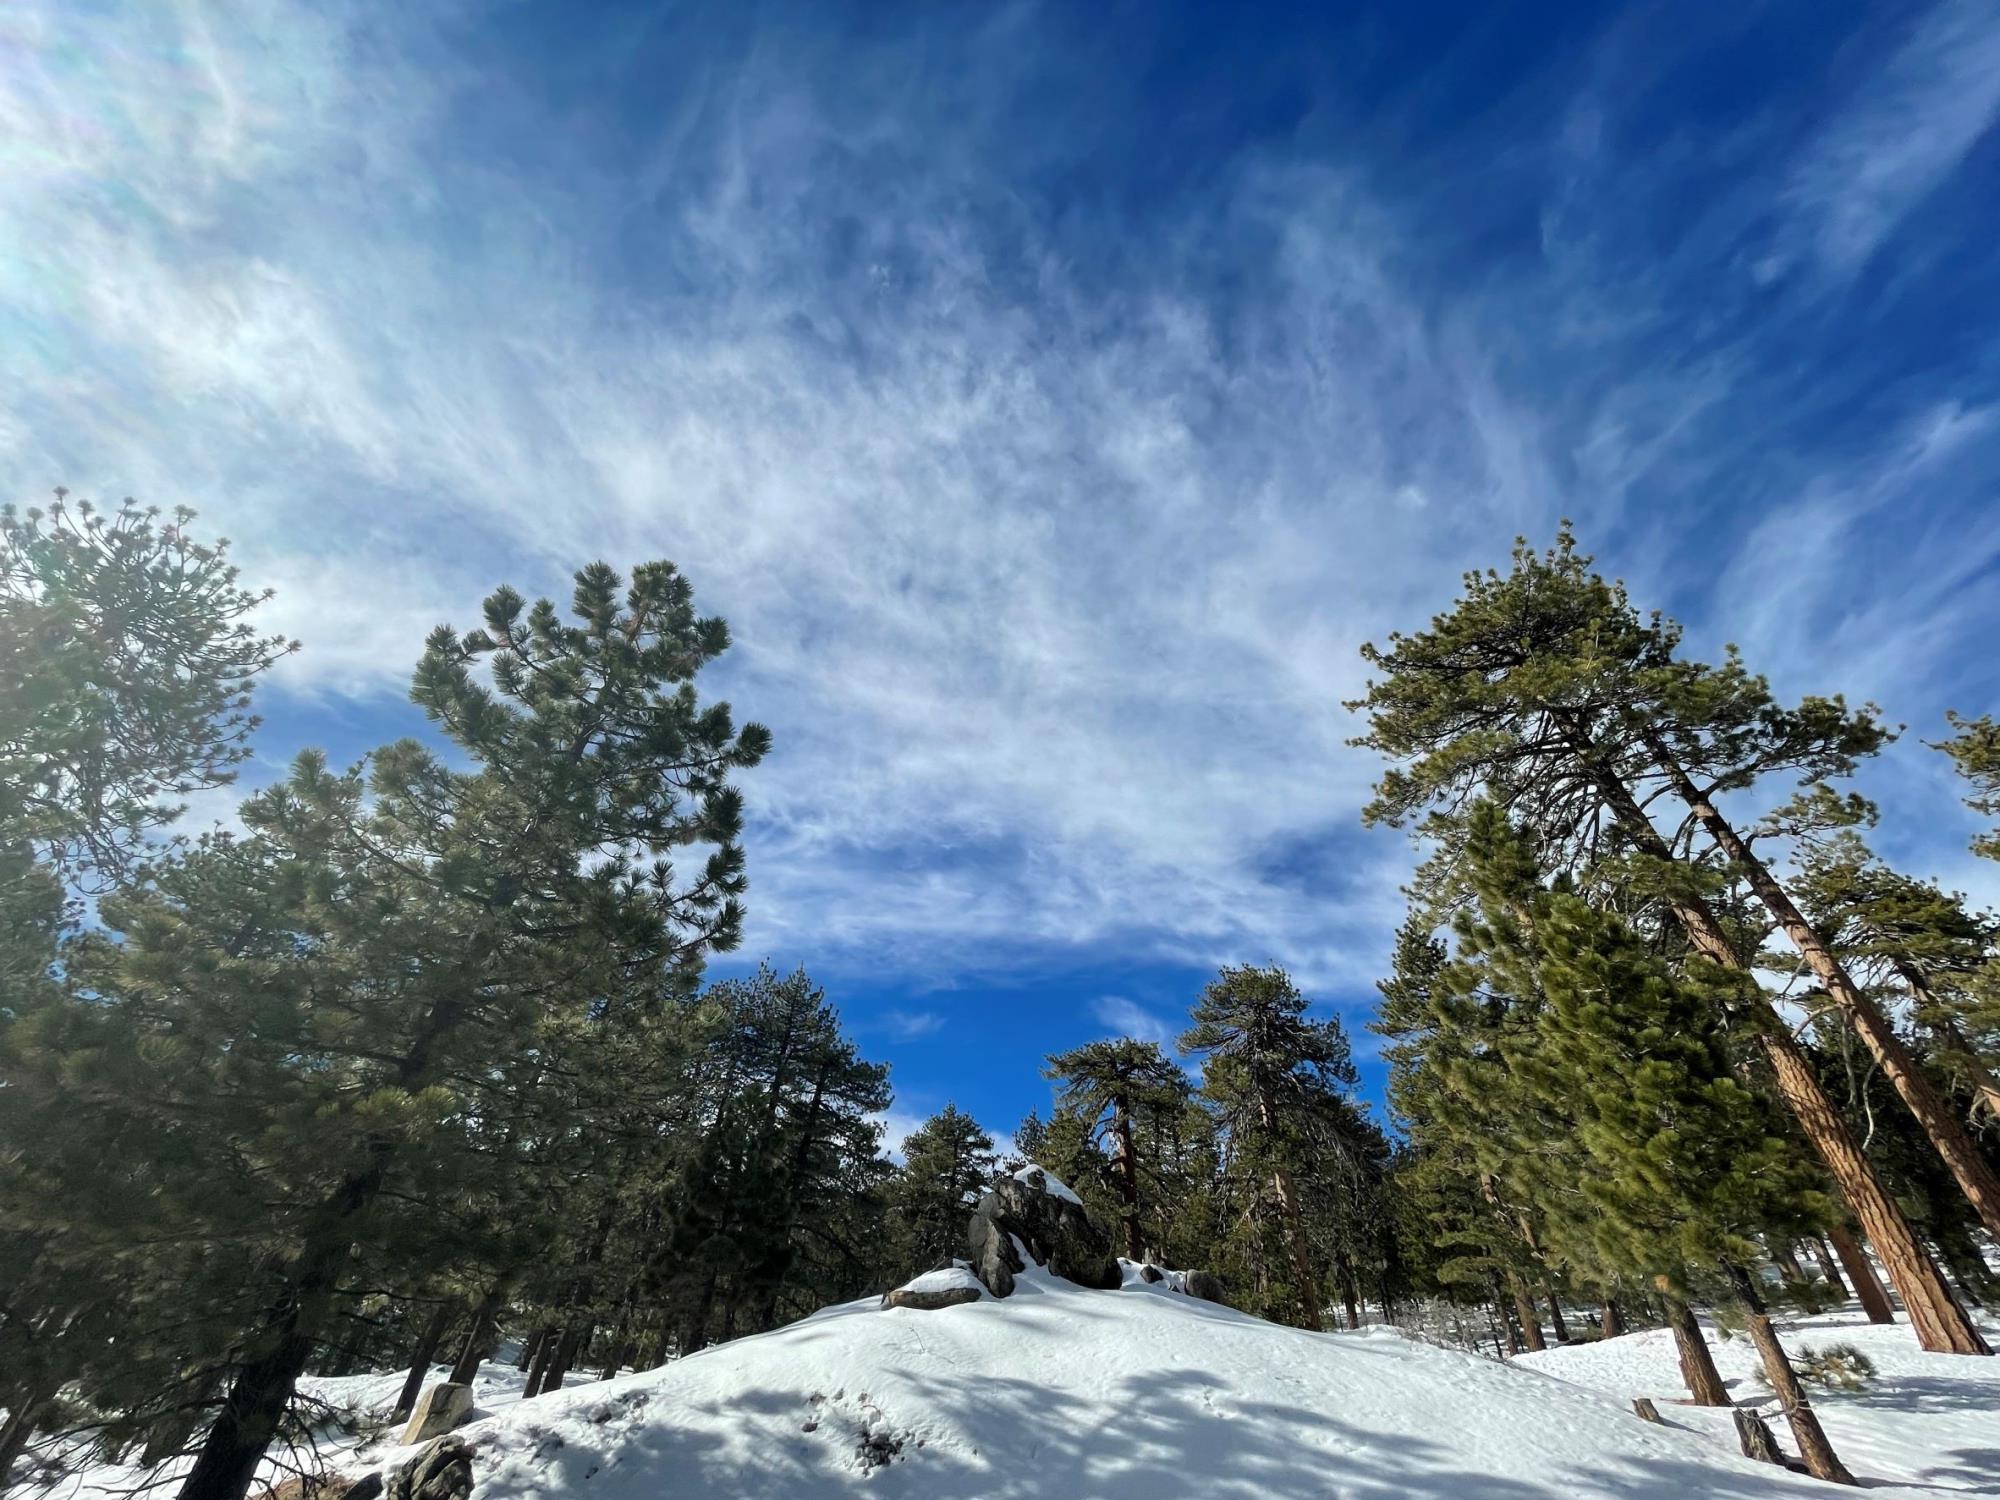 Frazier Park snow pine trees